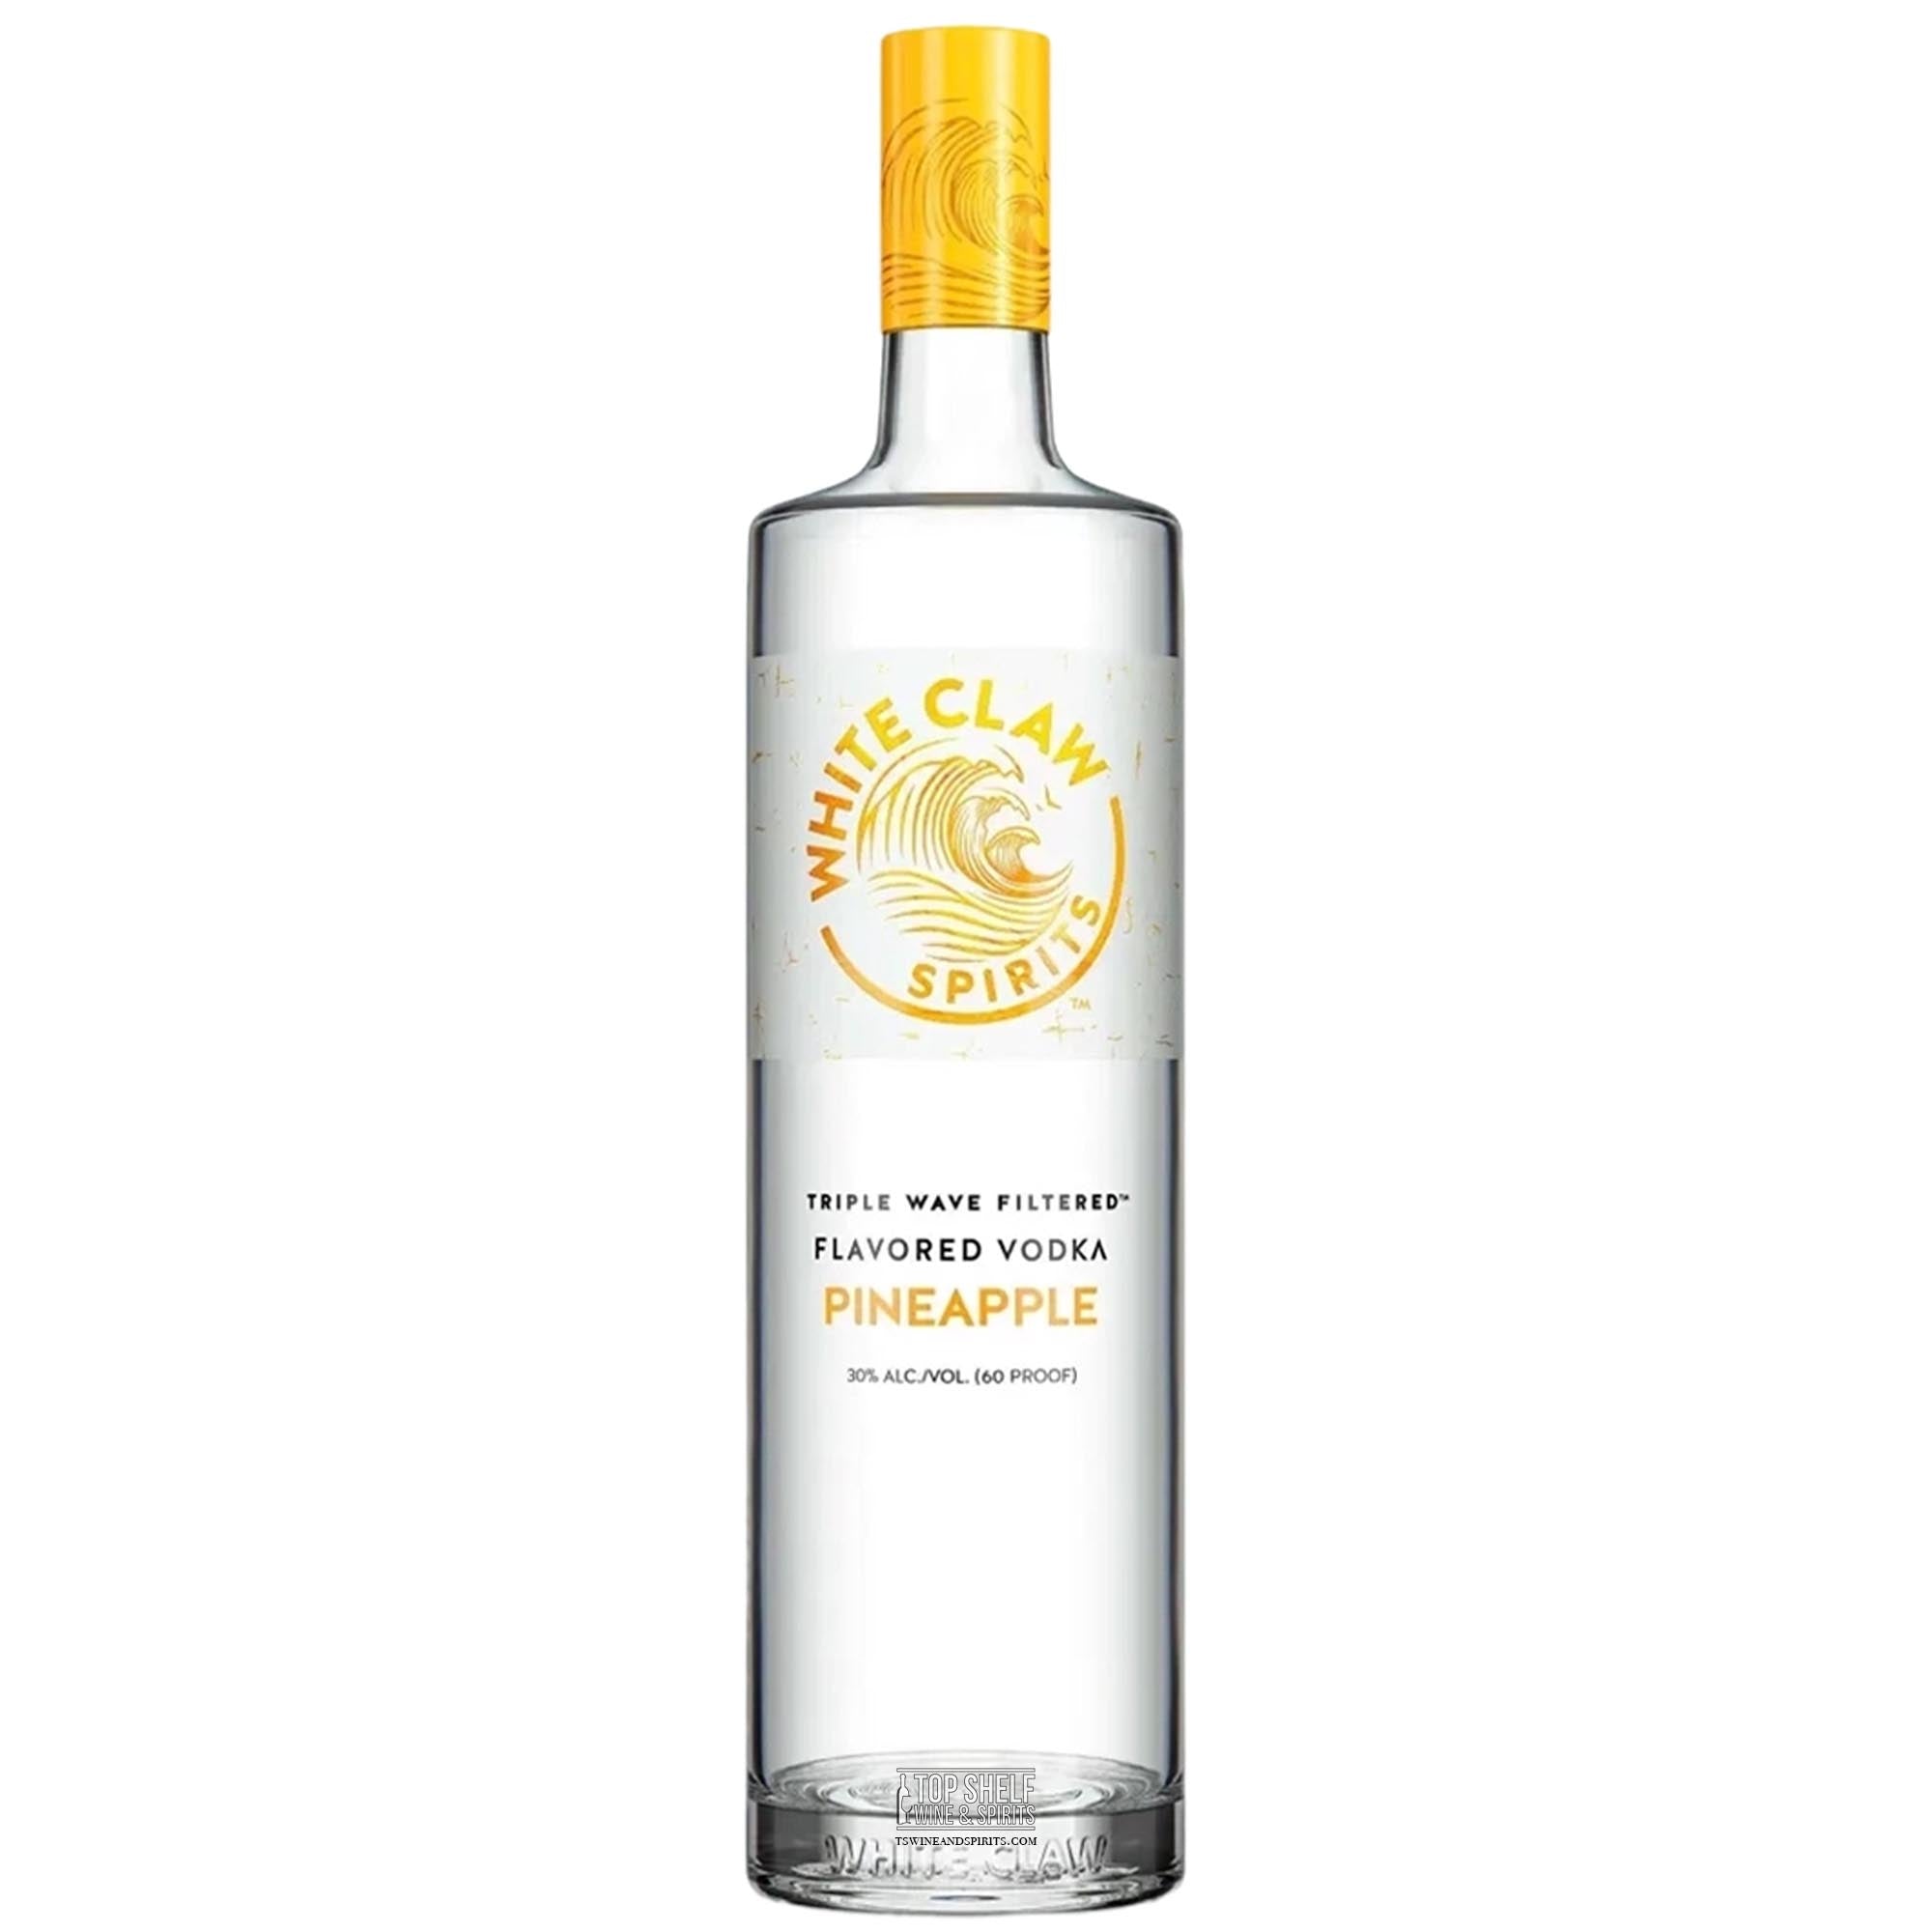 Ciroc Passion Infused Vodka, 750 ml - Ralphs